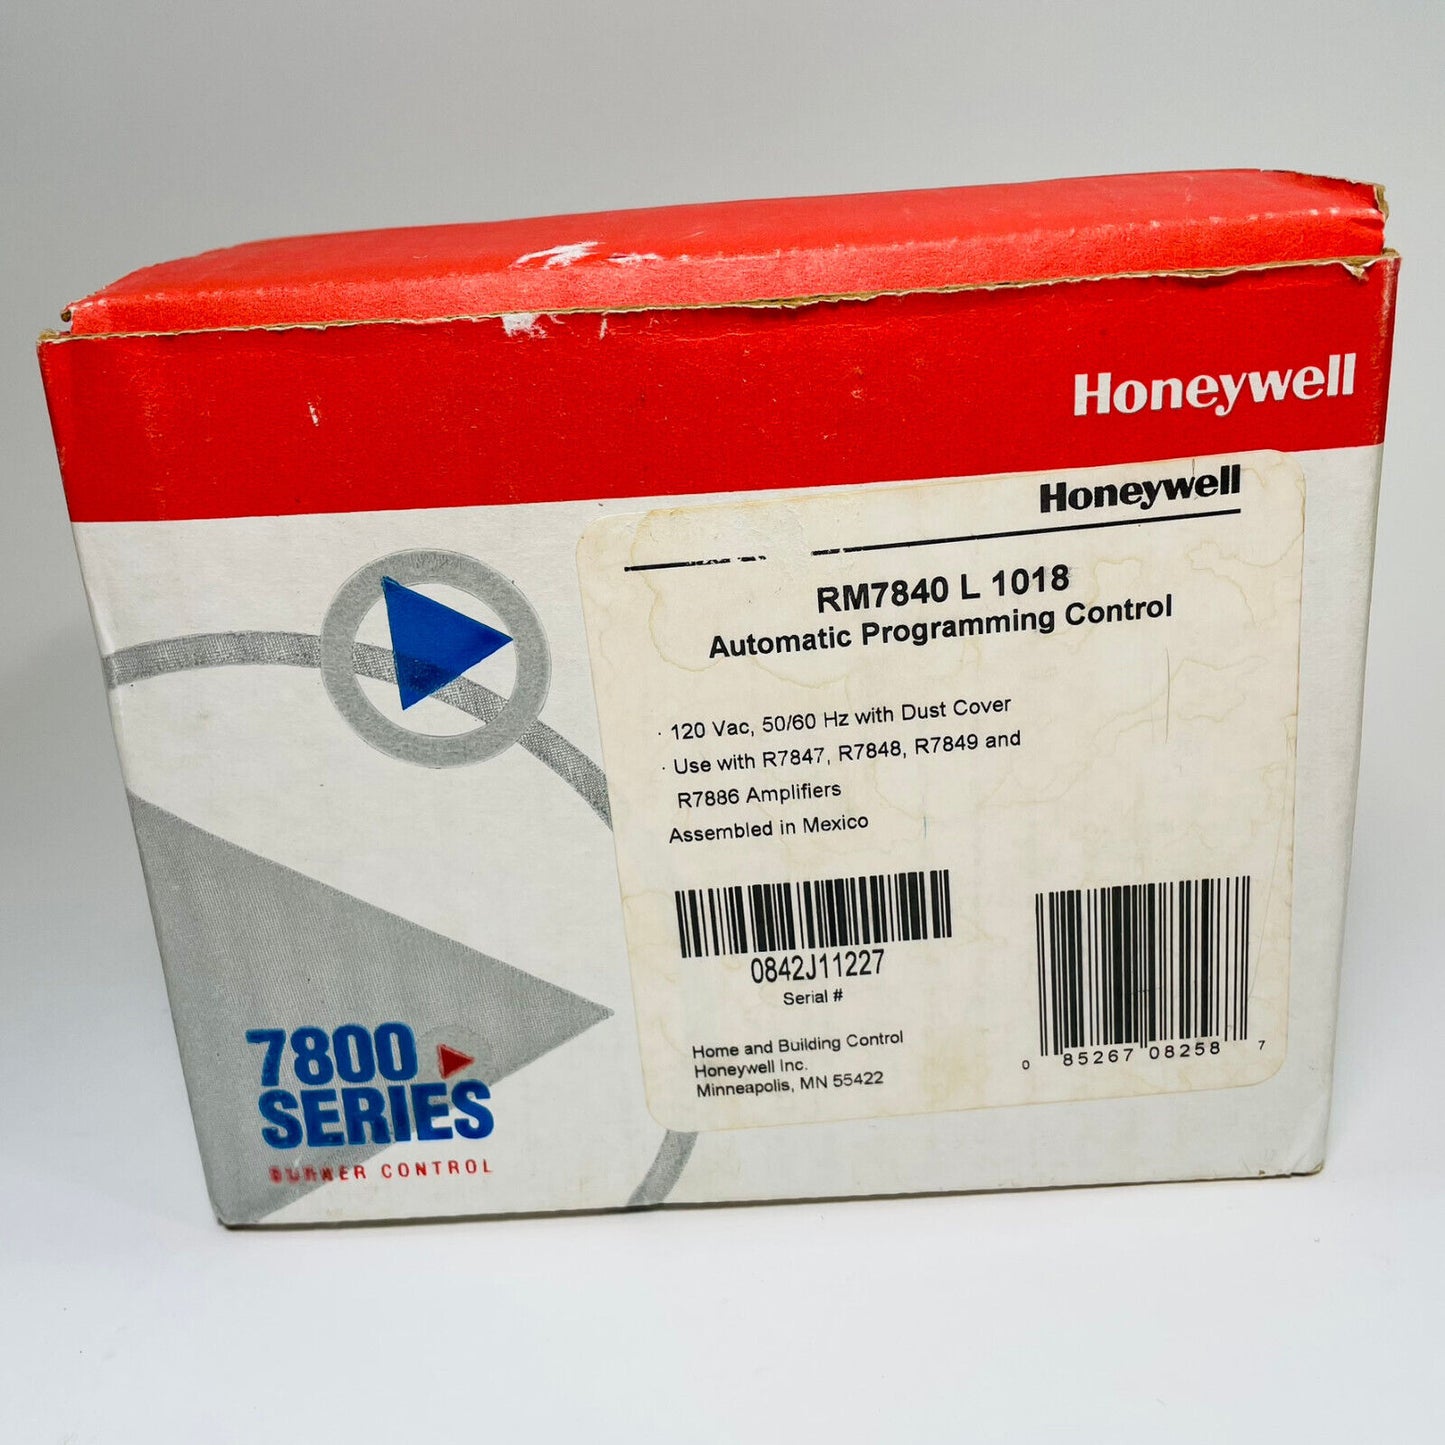 New Honeywell RM7840 L 1018 Burner Control